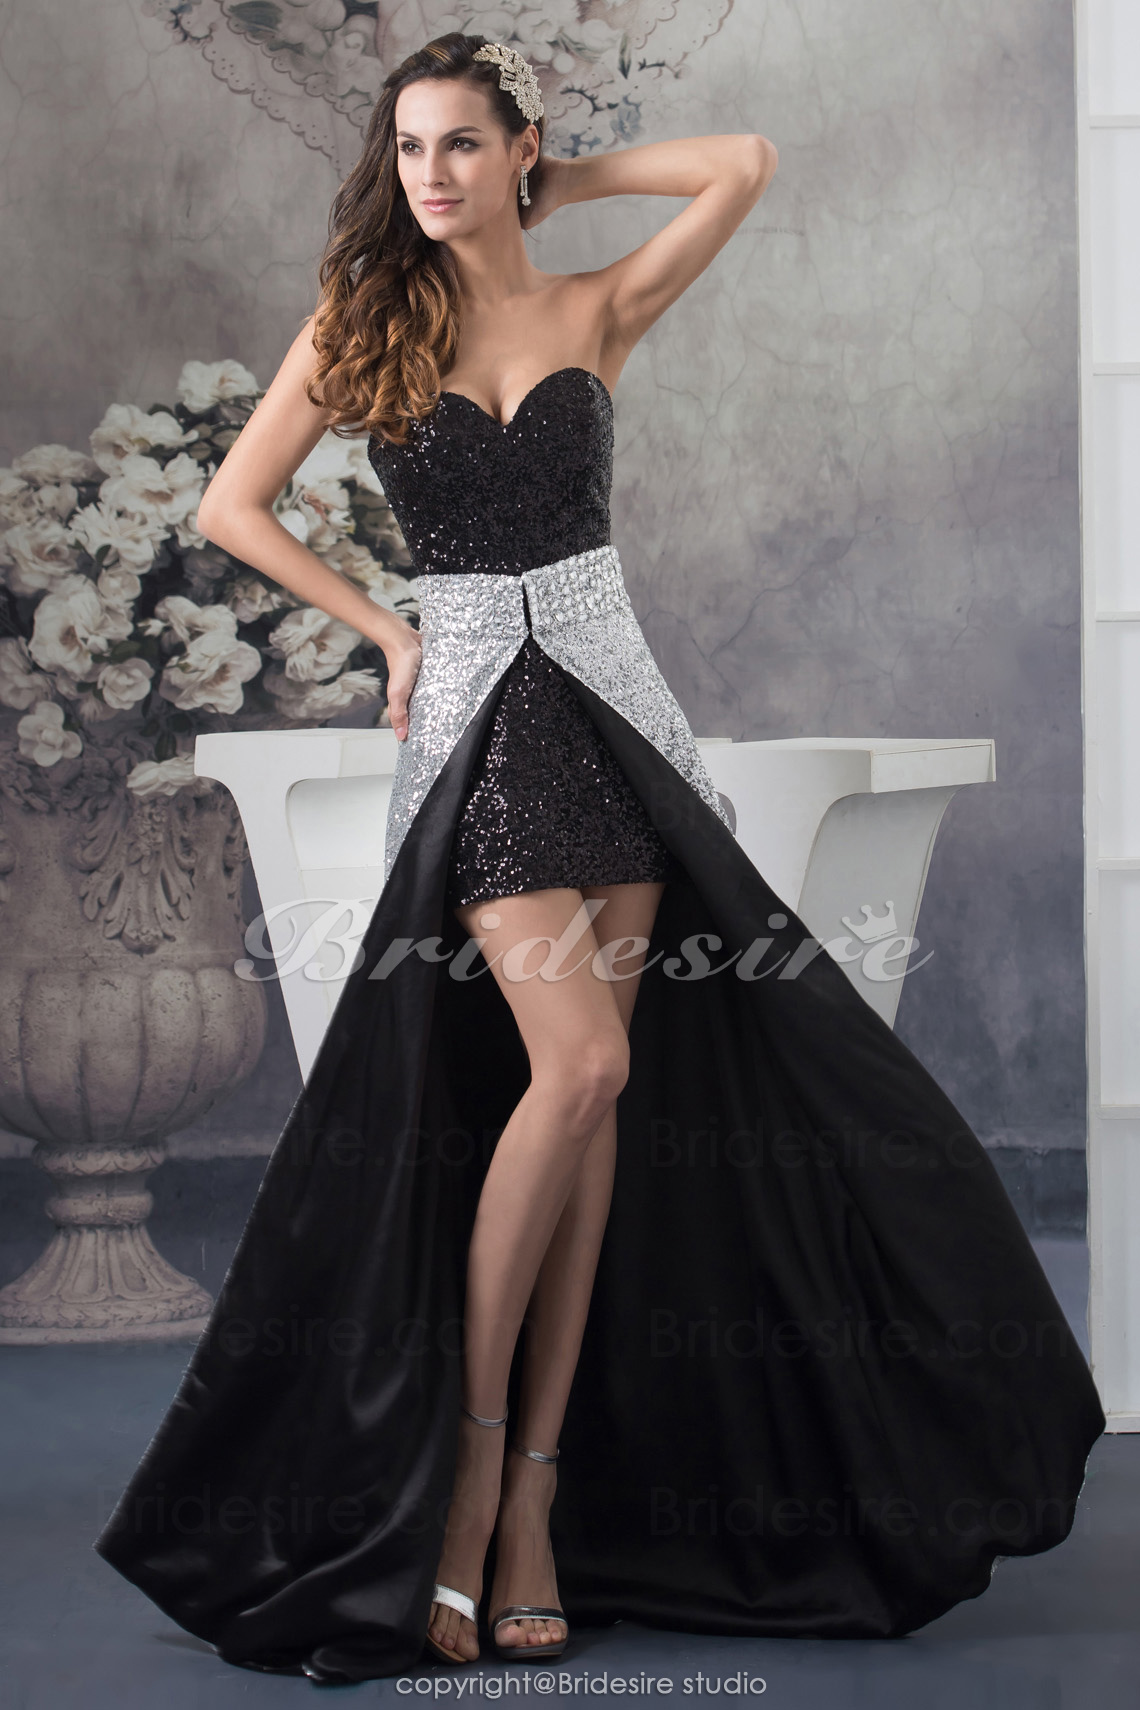 A-line Sweetheart Asymmetrical Sleeveless Sequined Dress